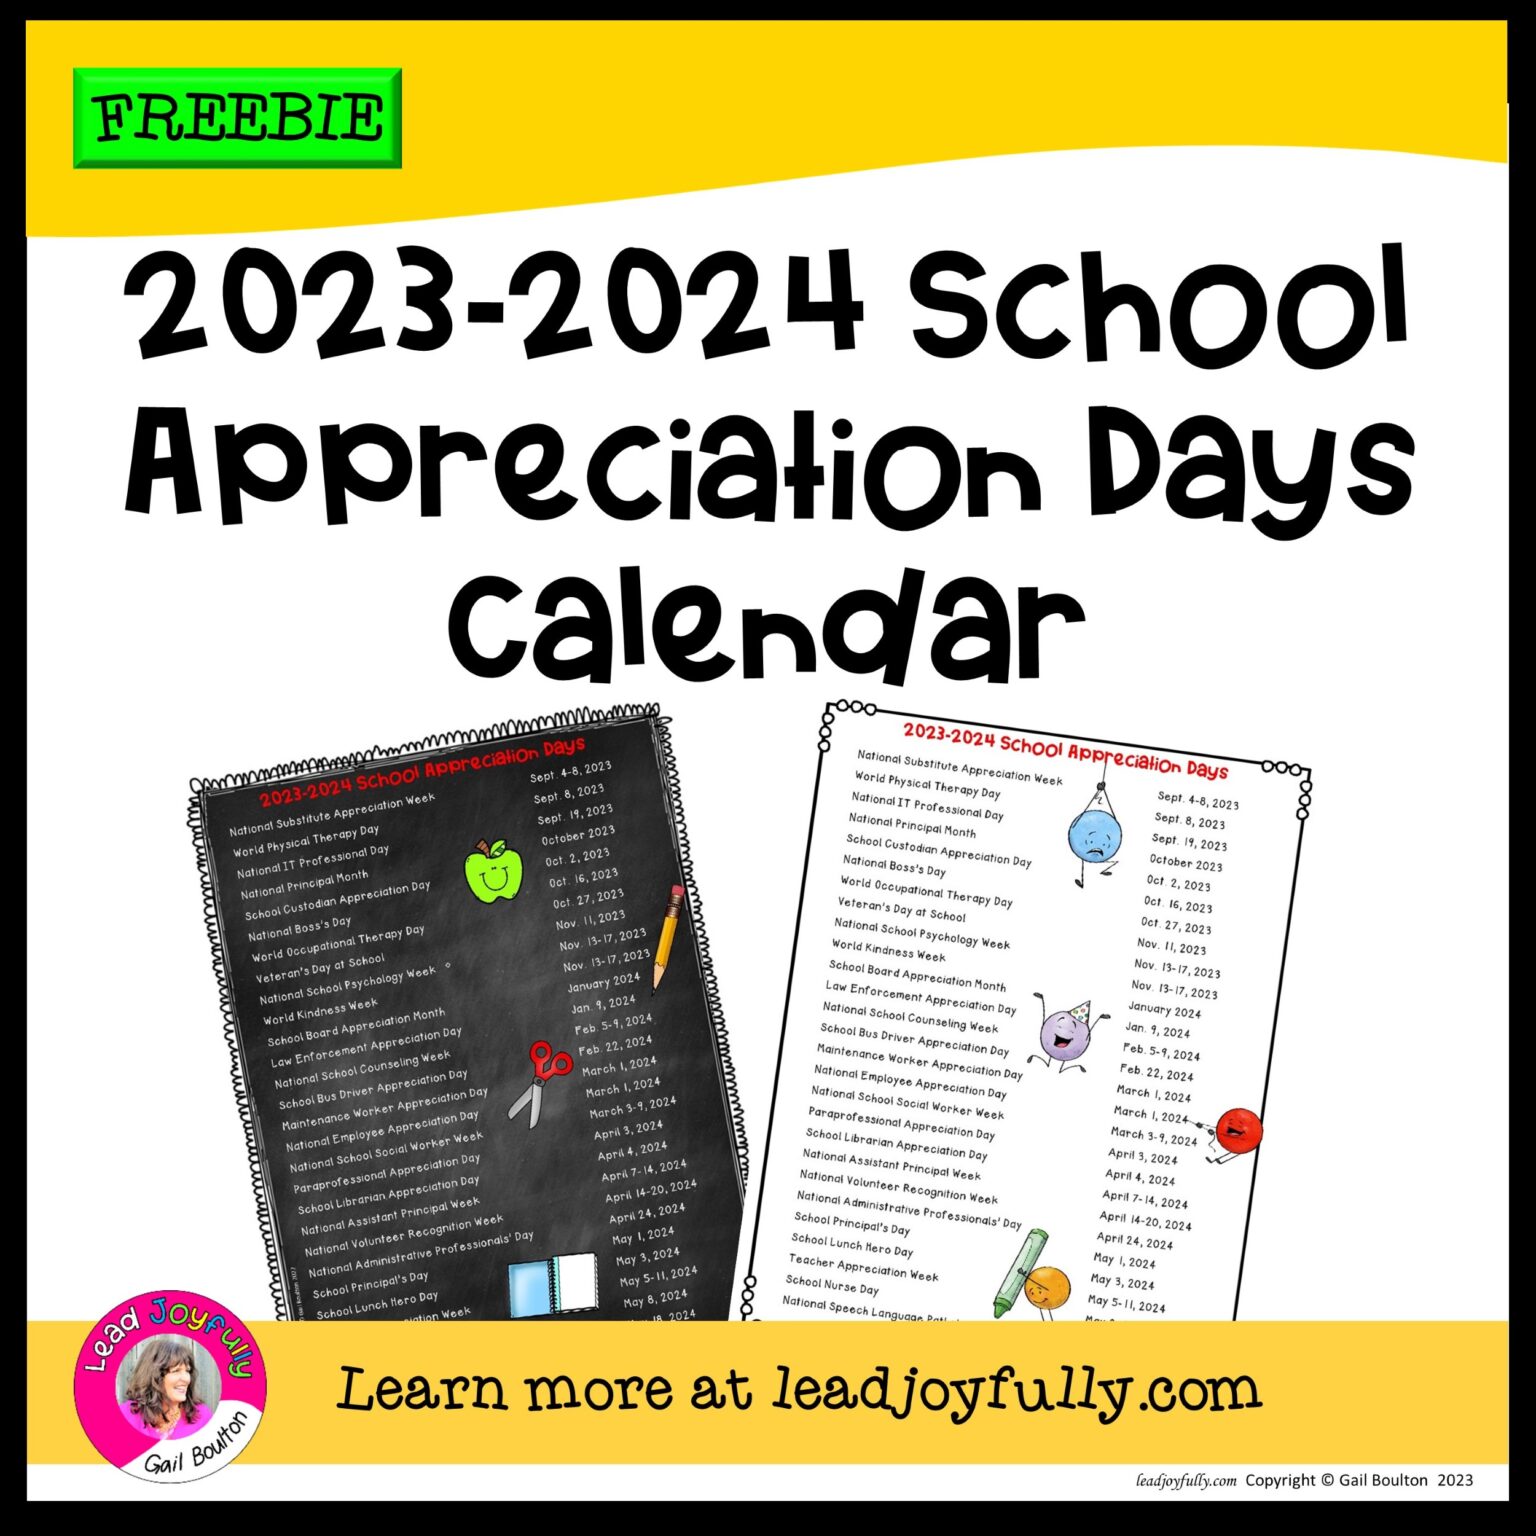 free-download-2023-2024-school-appreciation-calendar-lead-joyfully